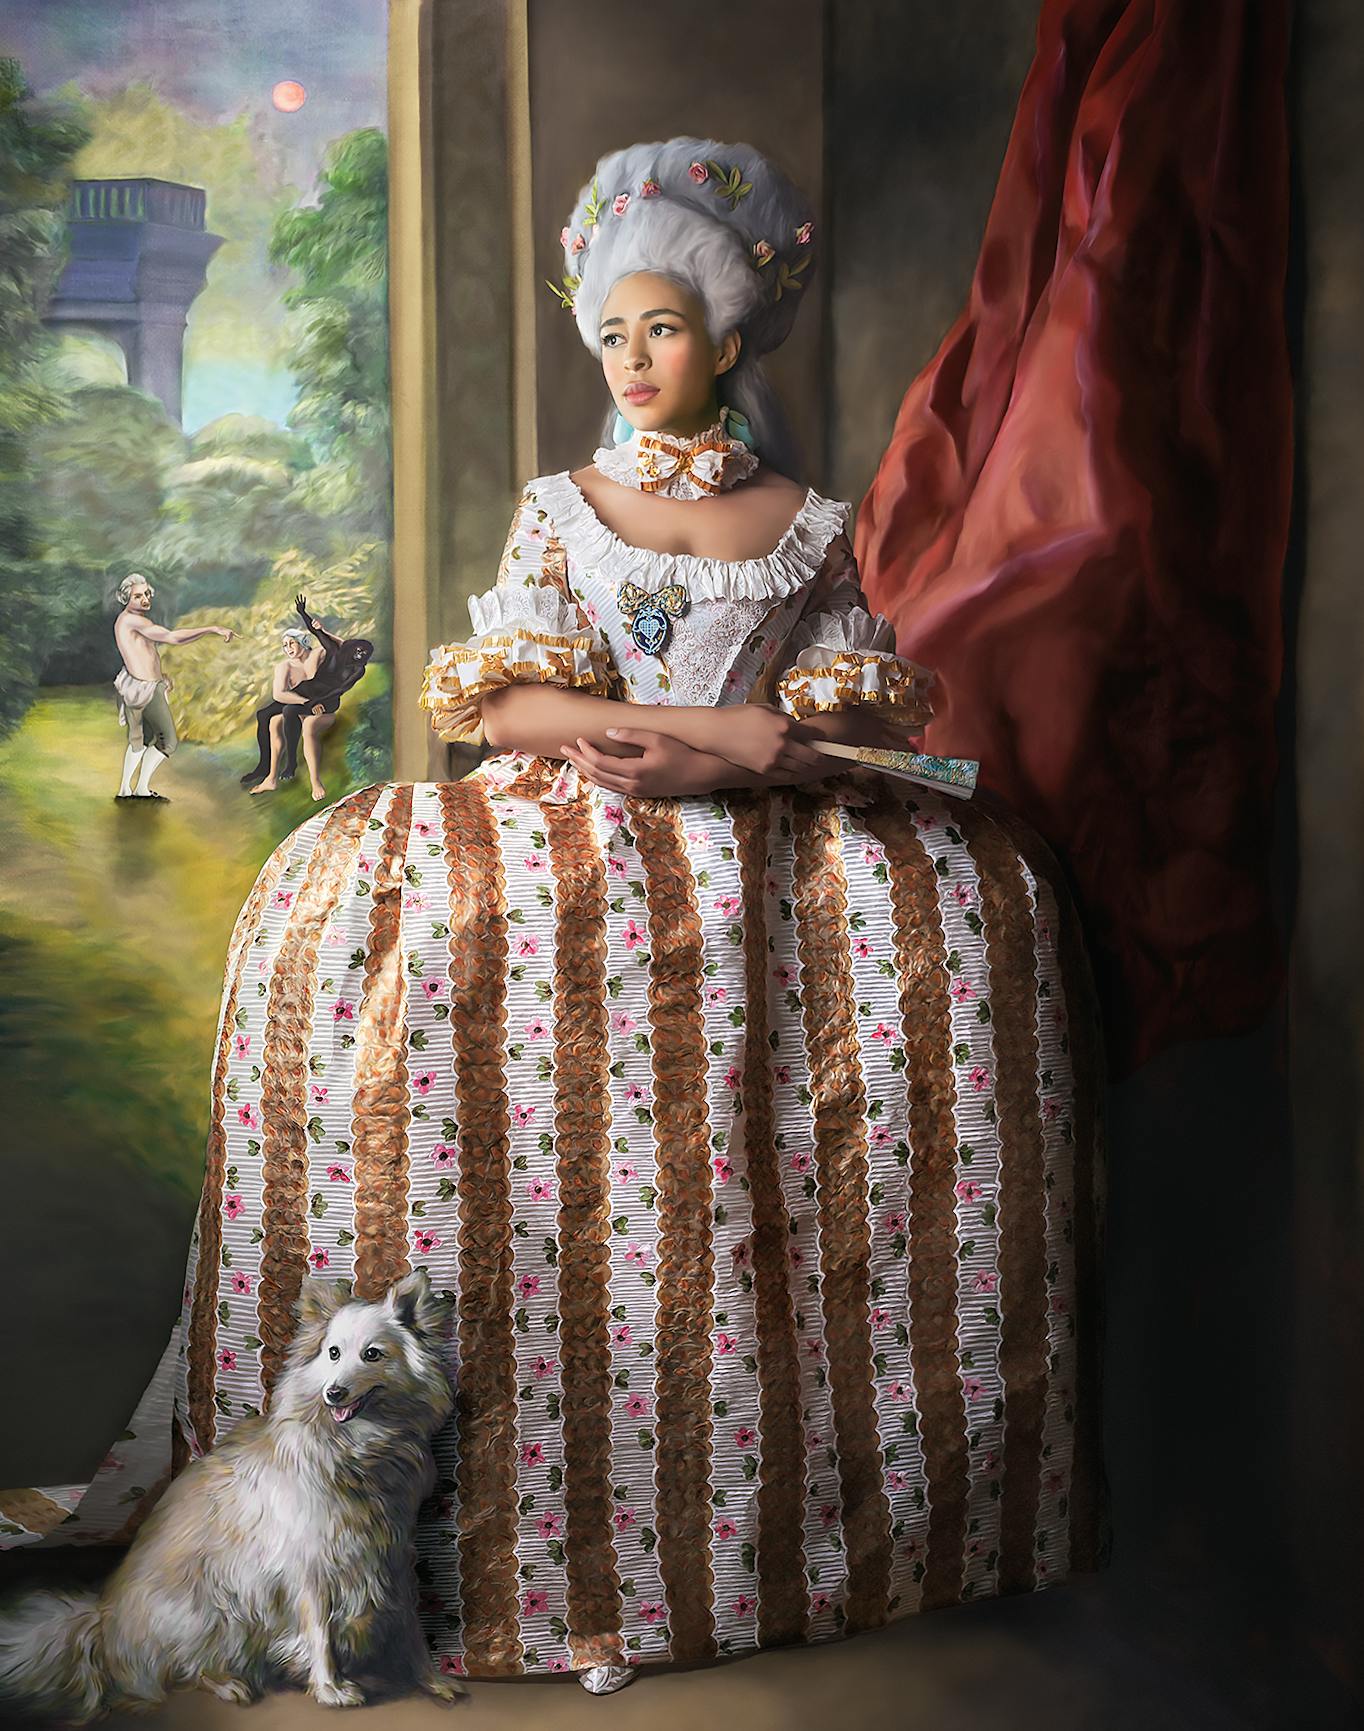 portrait of a model wearing an ornate paper dress posing beside a window that appears as a painting portraying a rape scene